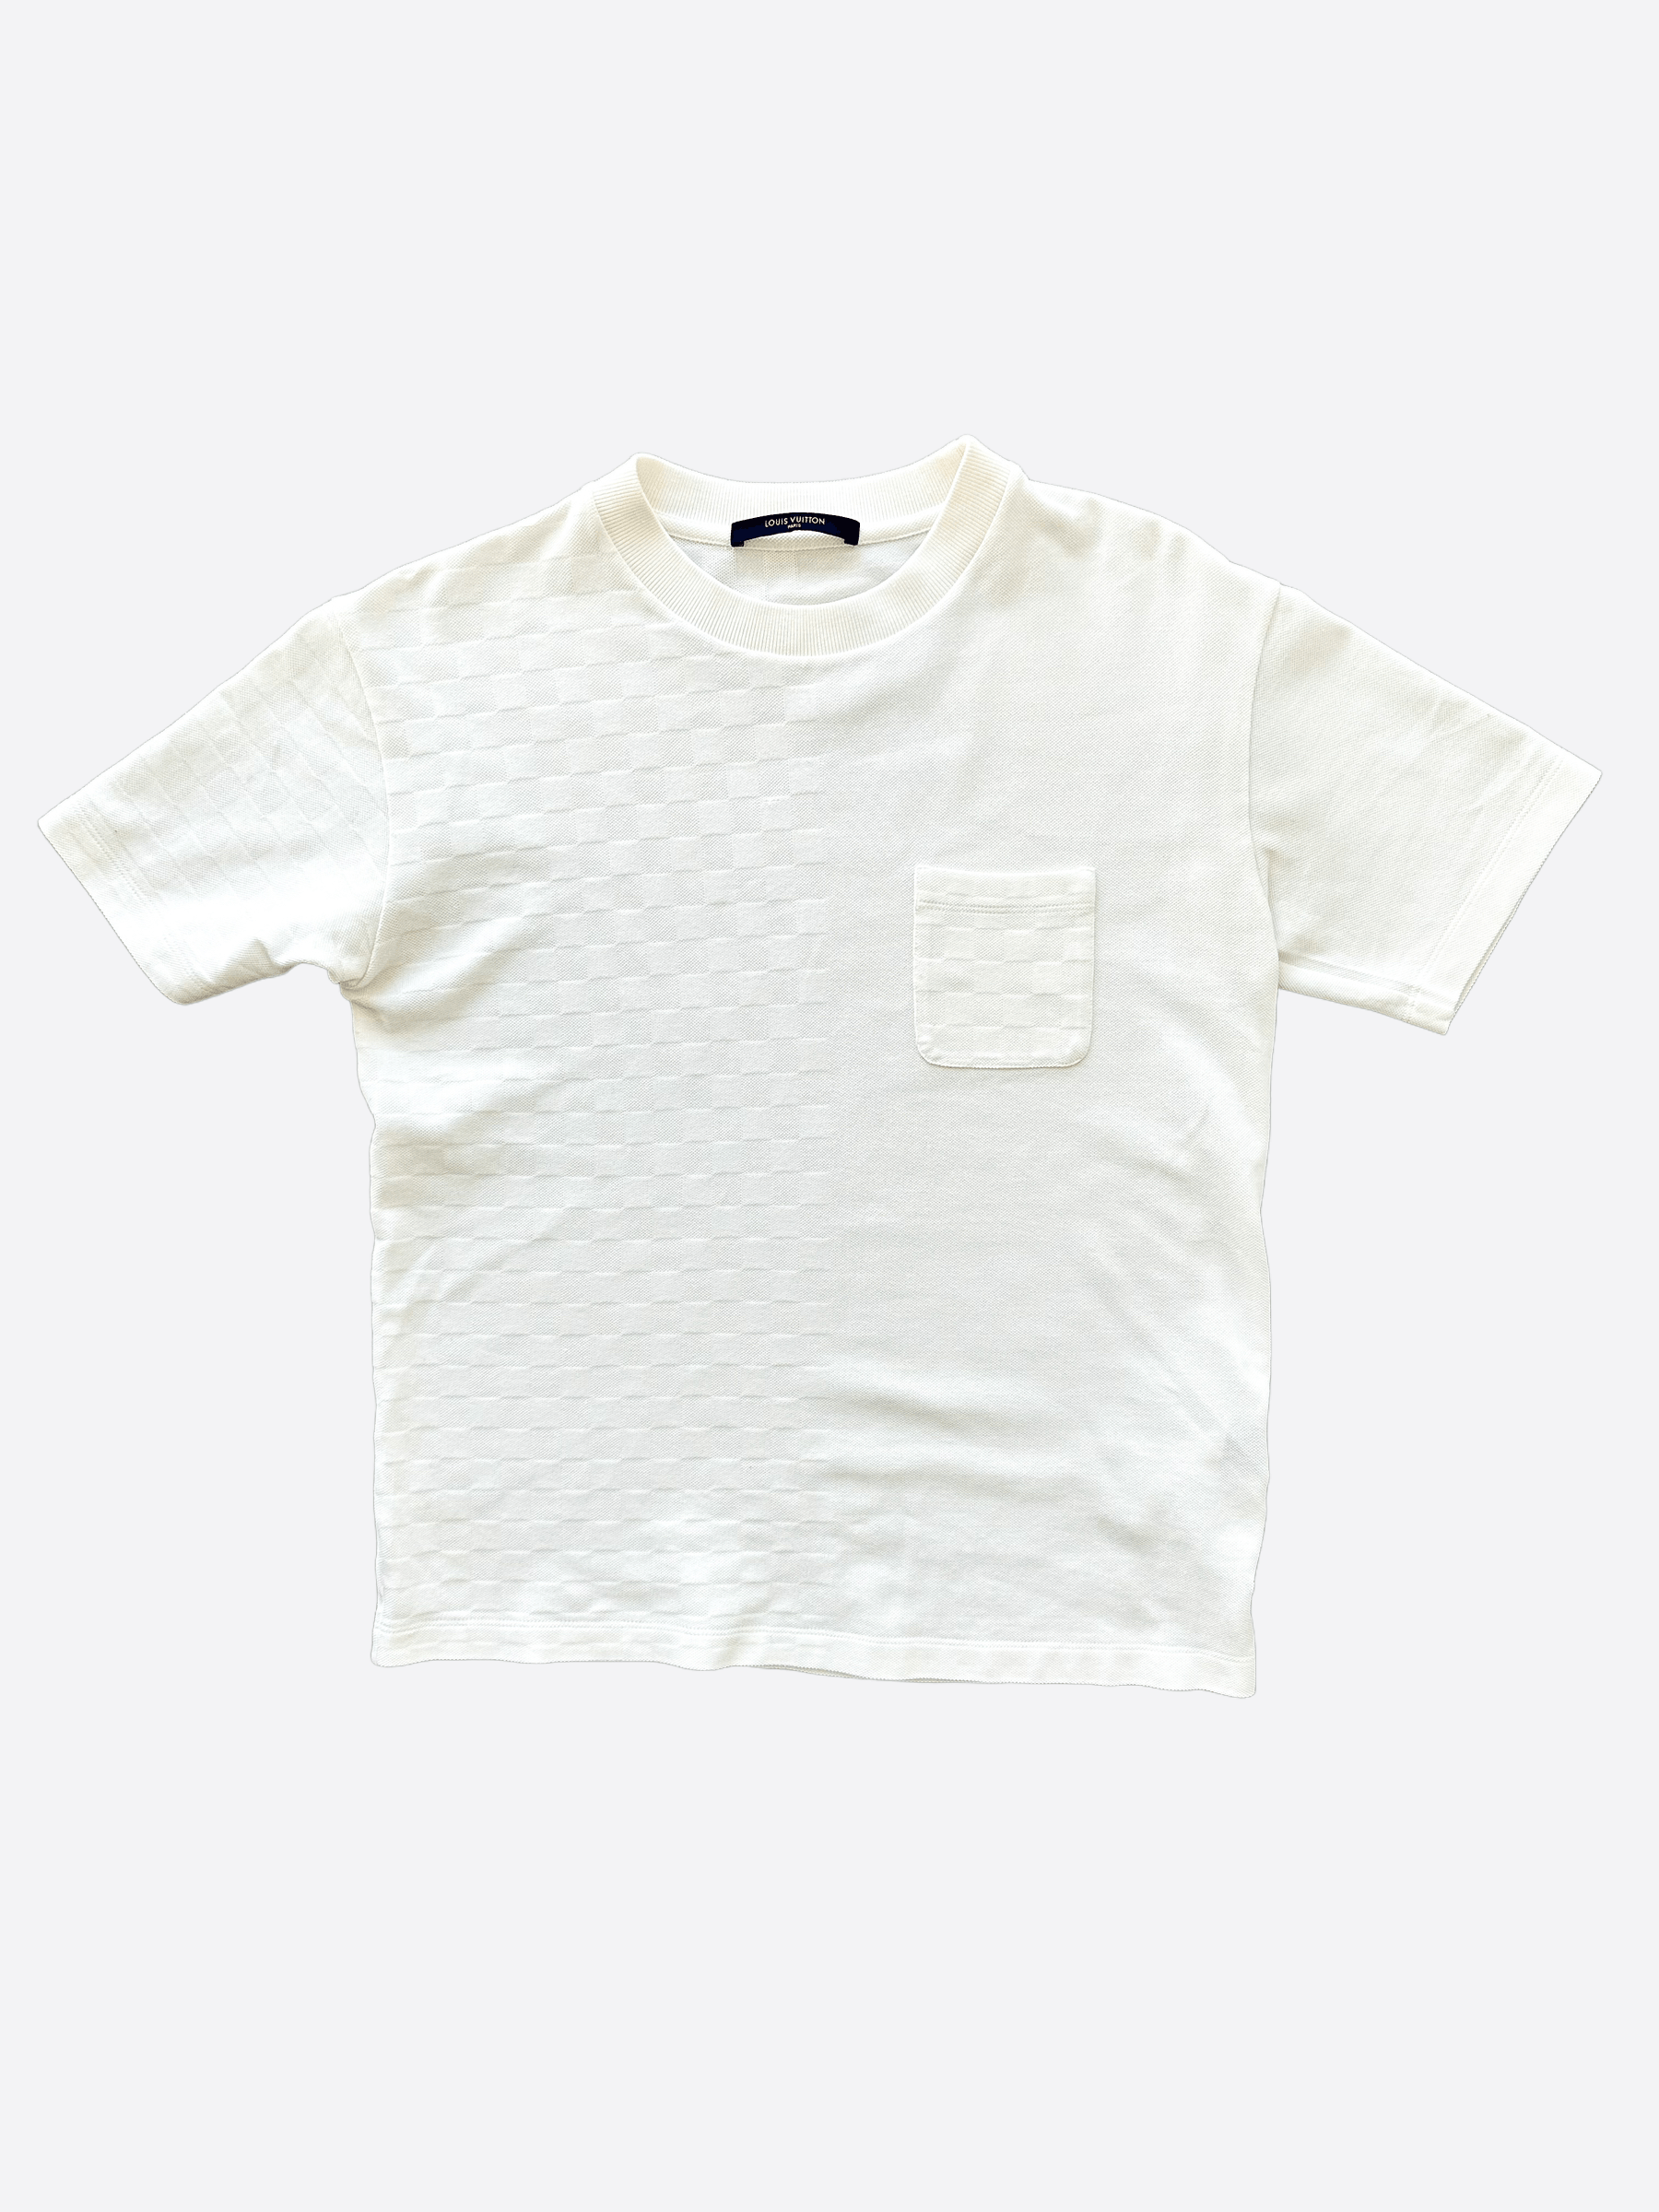 Louis Vuitton Signature 3D Pocket Monogram Short Sleeve Tee Shirt White  Pre-Owne